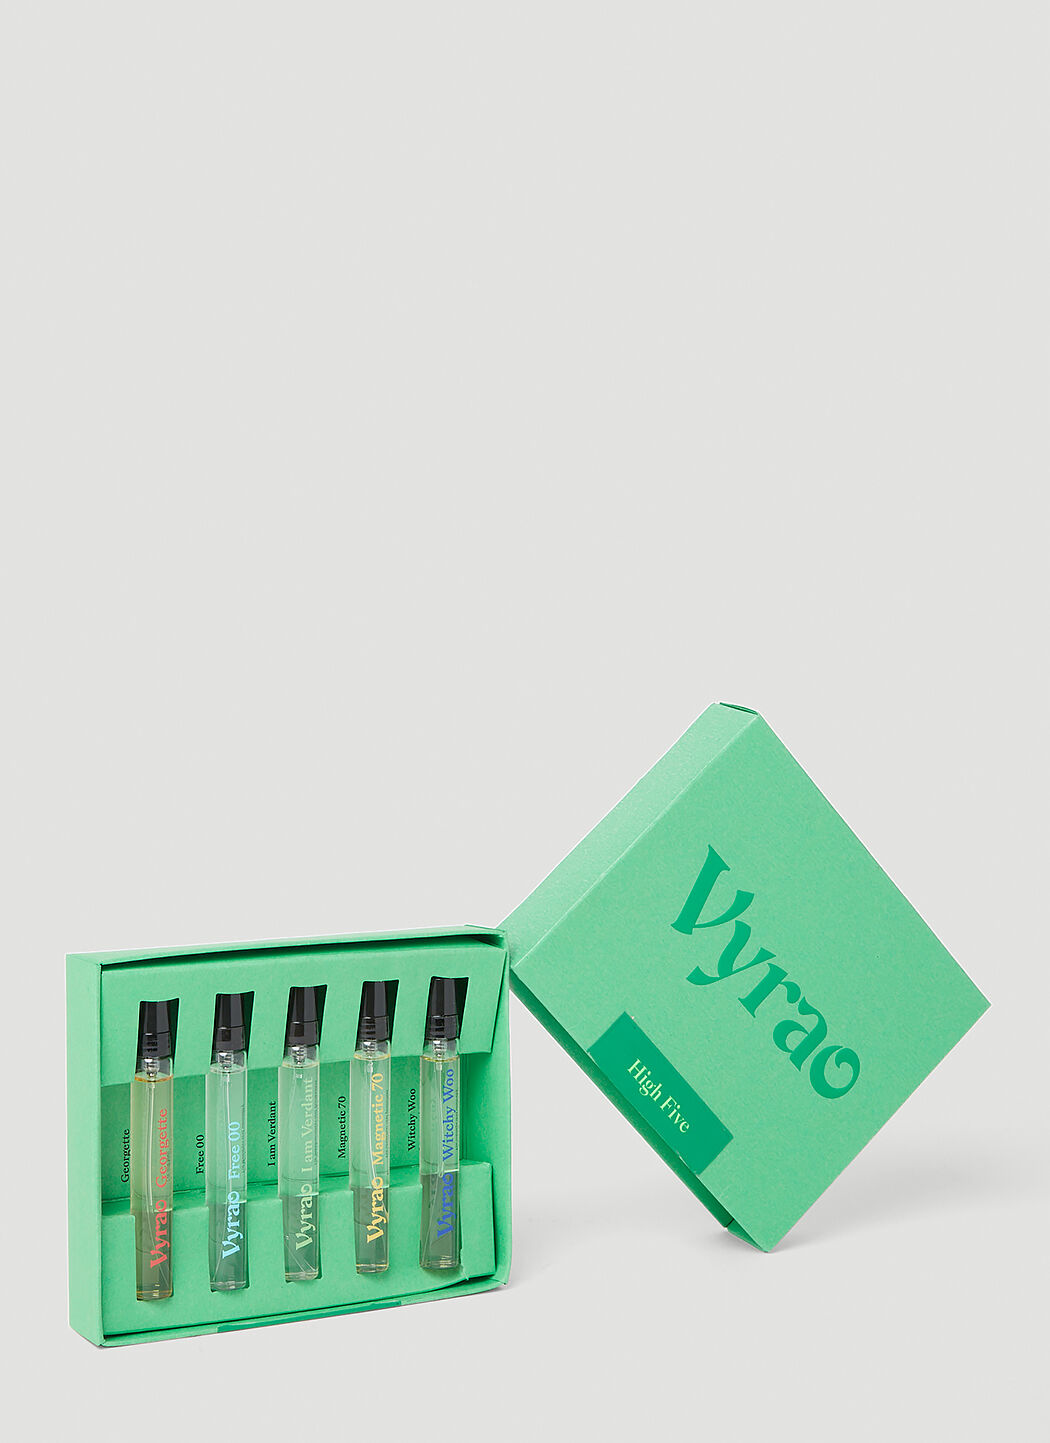 Vyrao ハイヴァイブ トラベル香水 5本セット クリア vyr0353001